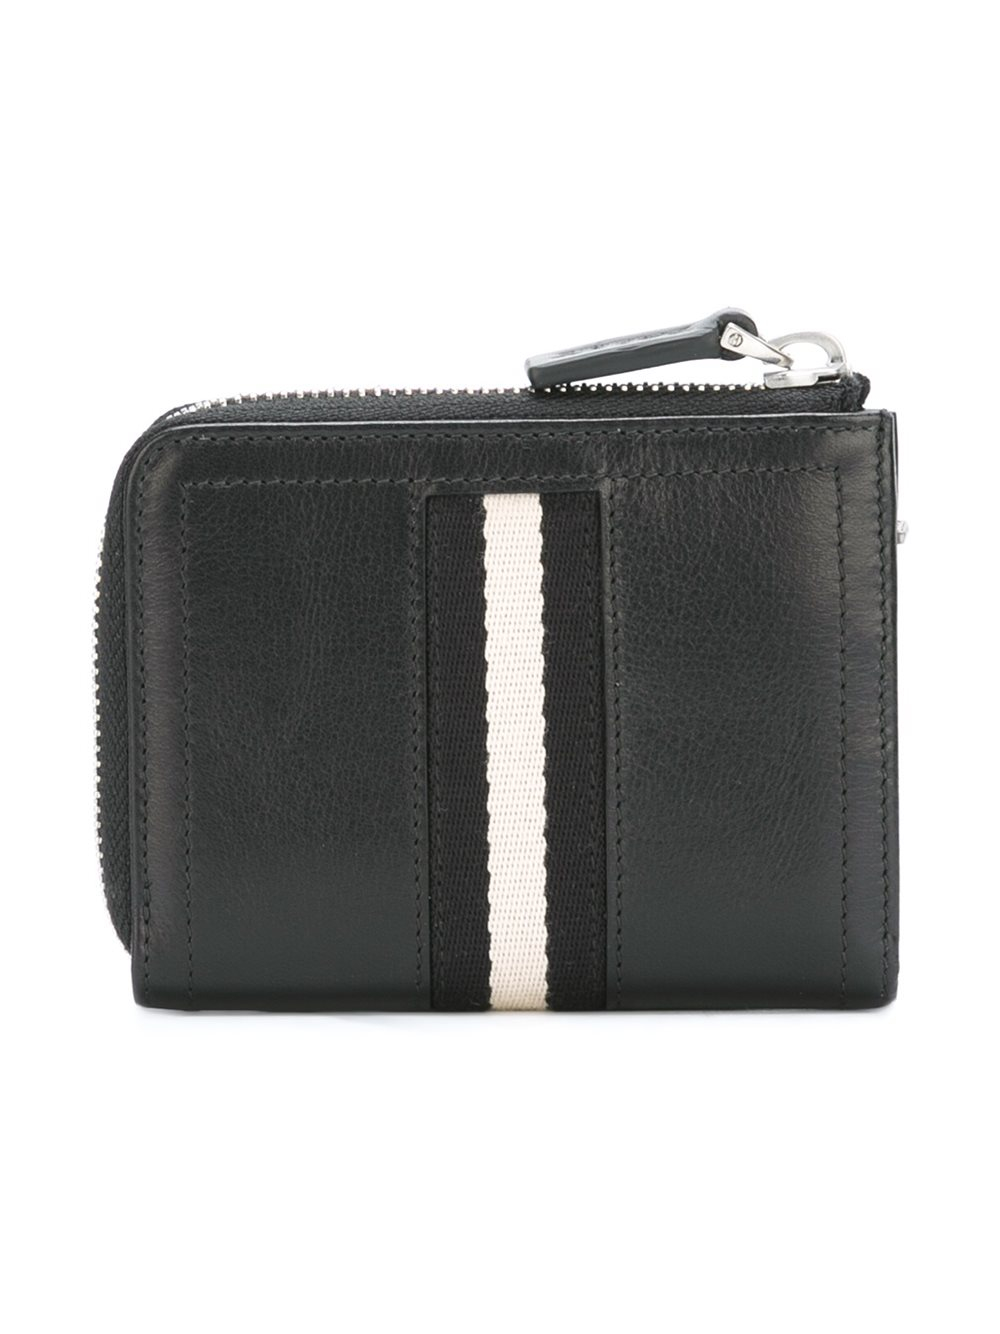 Bally Leather Zip Wallet in Black for Men - Lyst